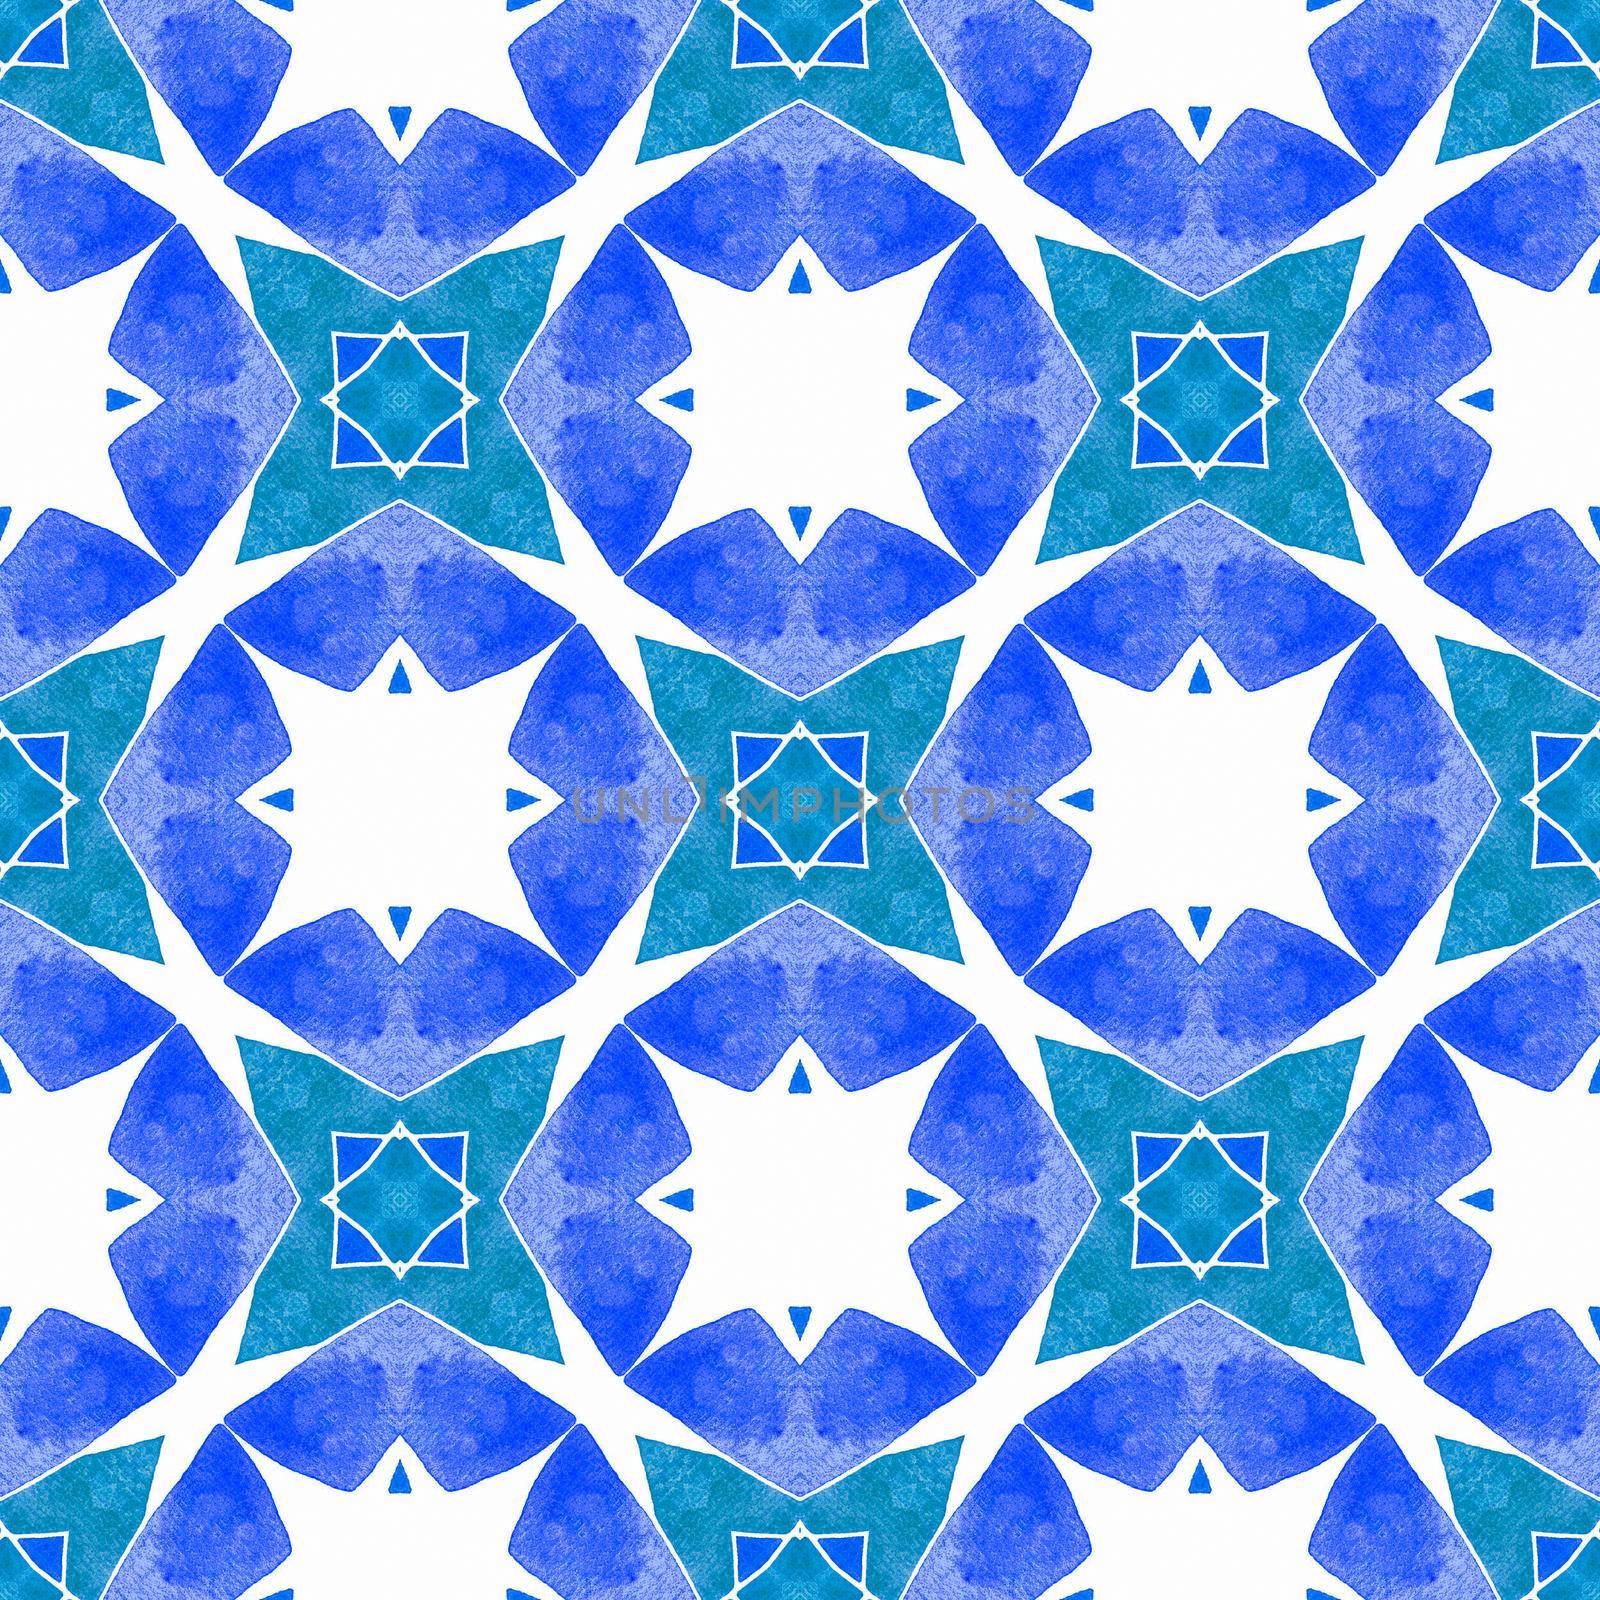 Chevron watercolor pattern. Blue fantastic boho chic summer design. Textile ready captivating print, swimwear fabric, wallpaper, wrapping. Green geometric chevron watercolor border.